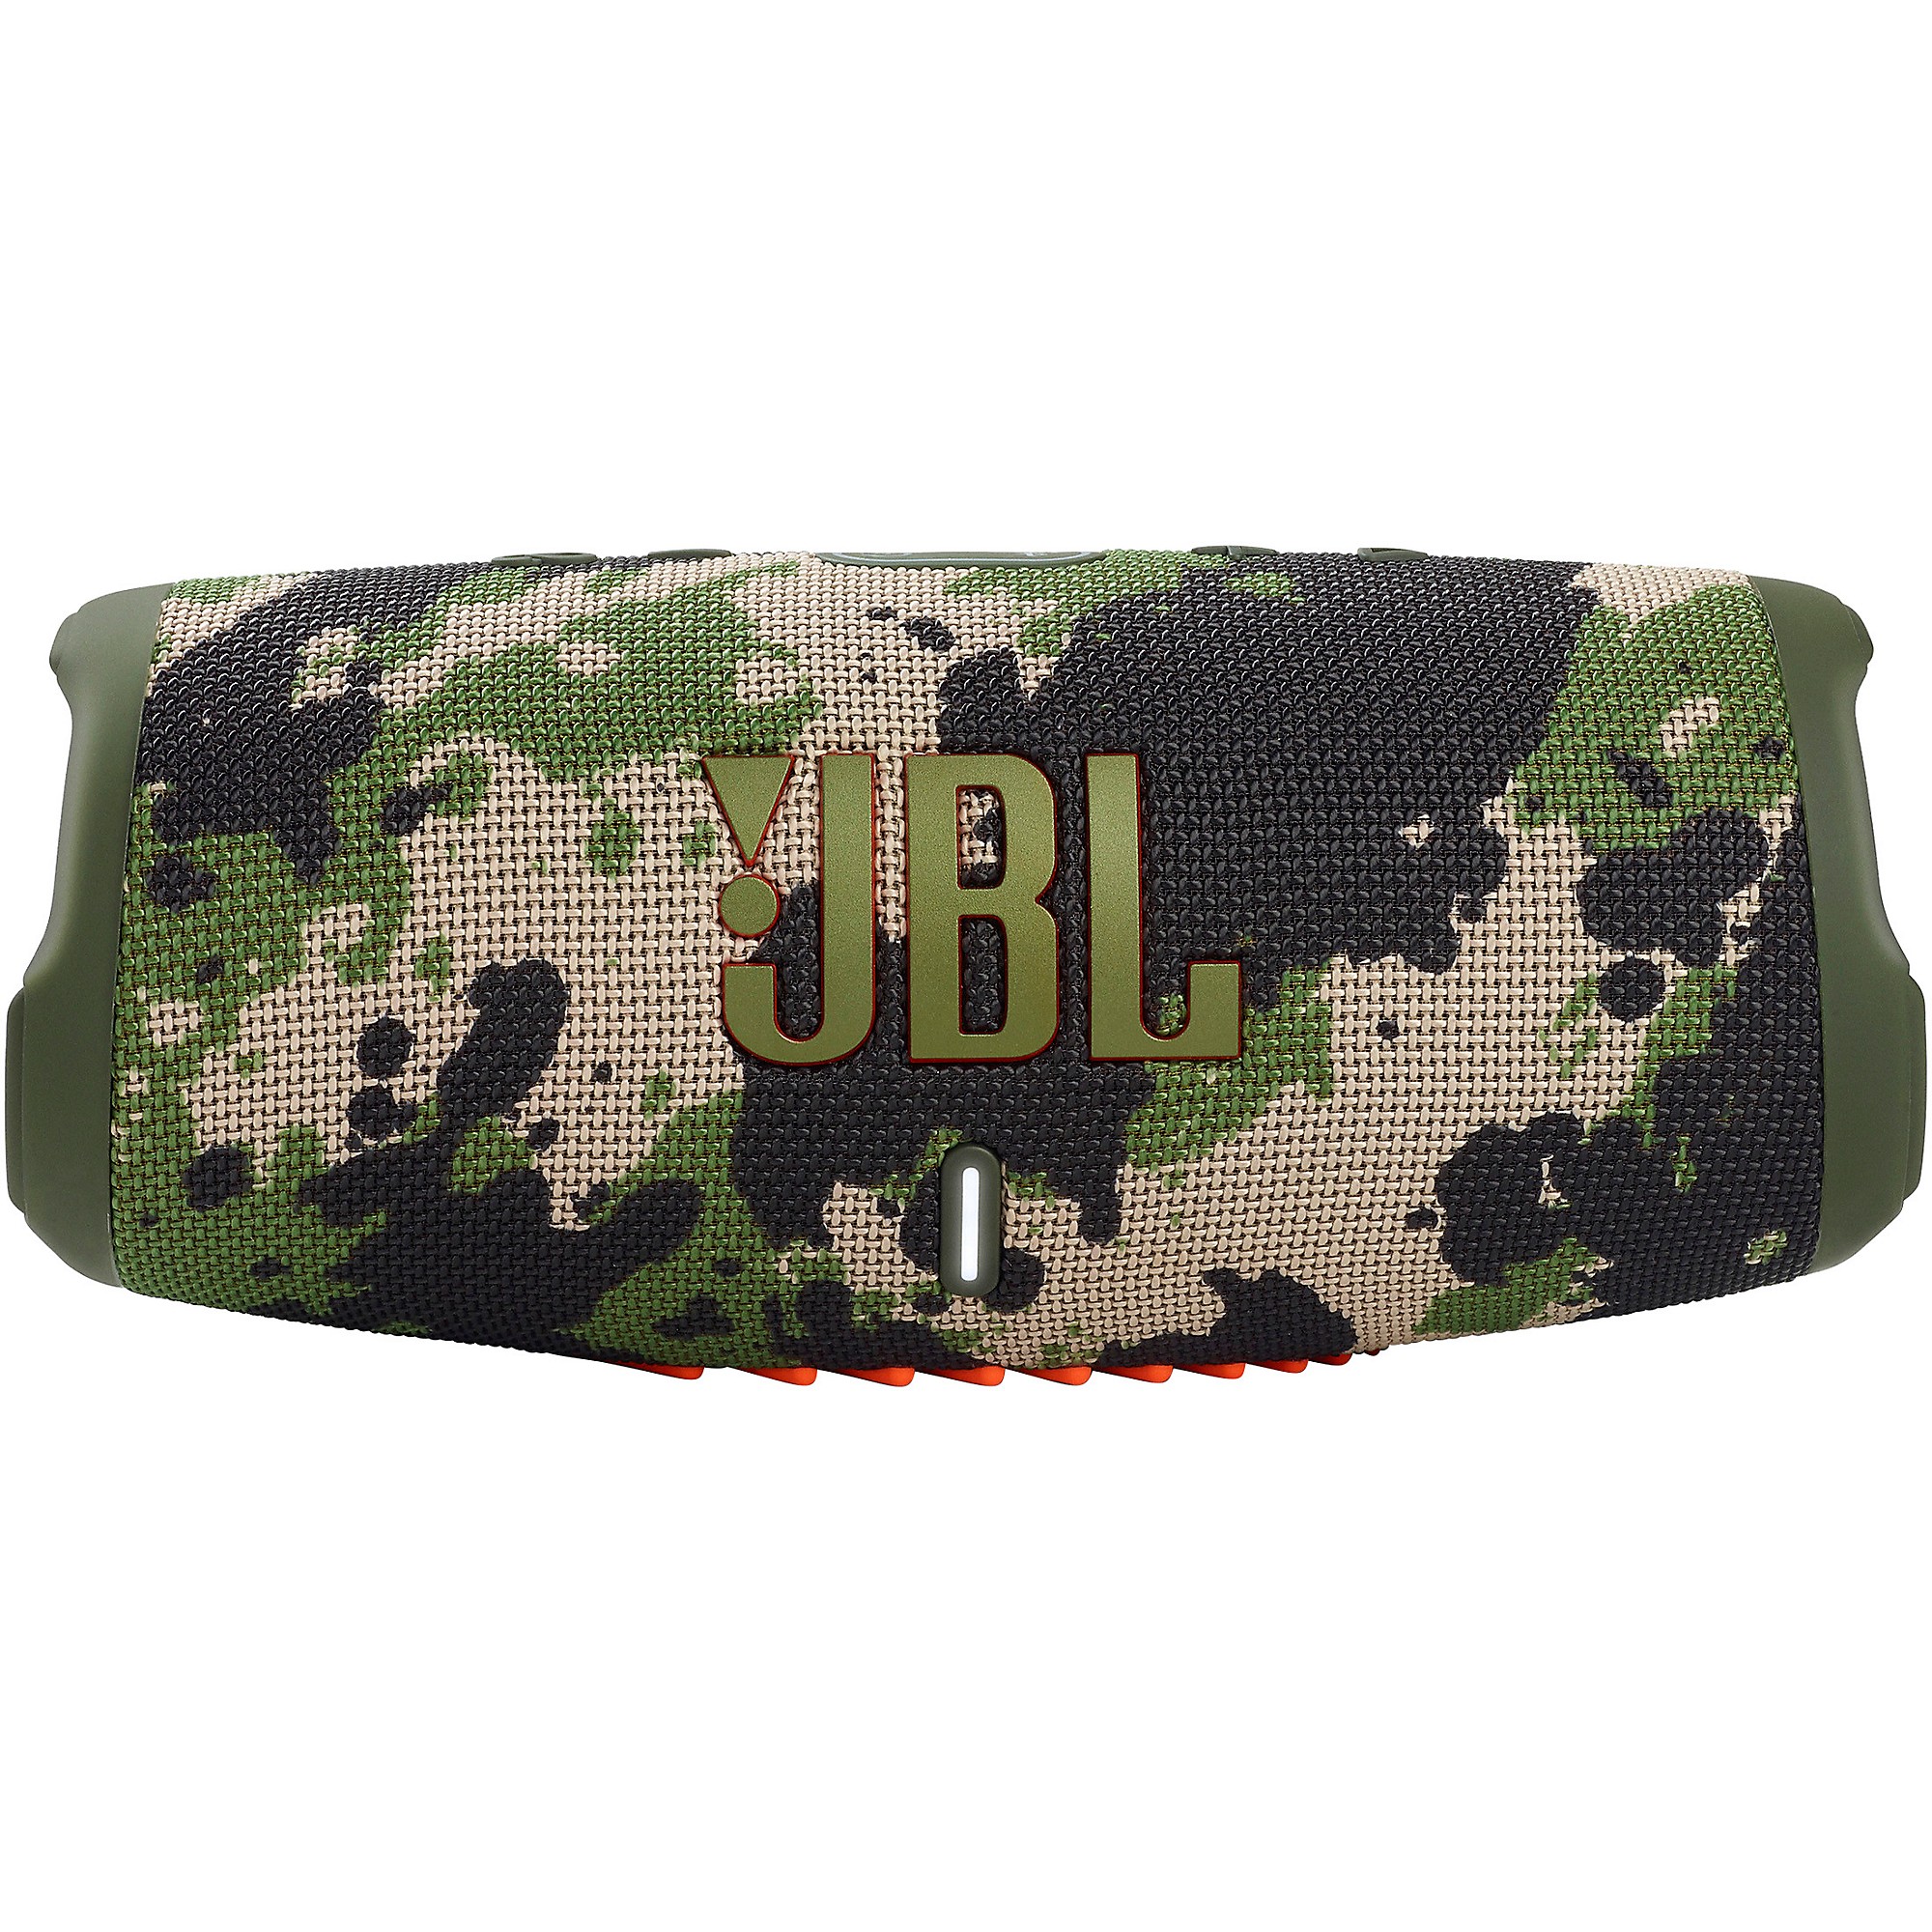  JBL Charge 5 Clip 4 Bundle - Portable Bluetooth